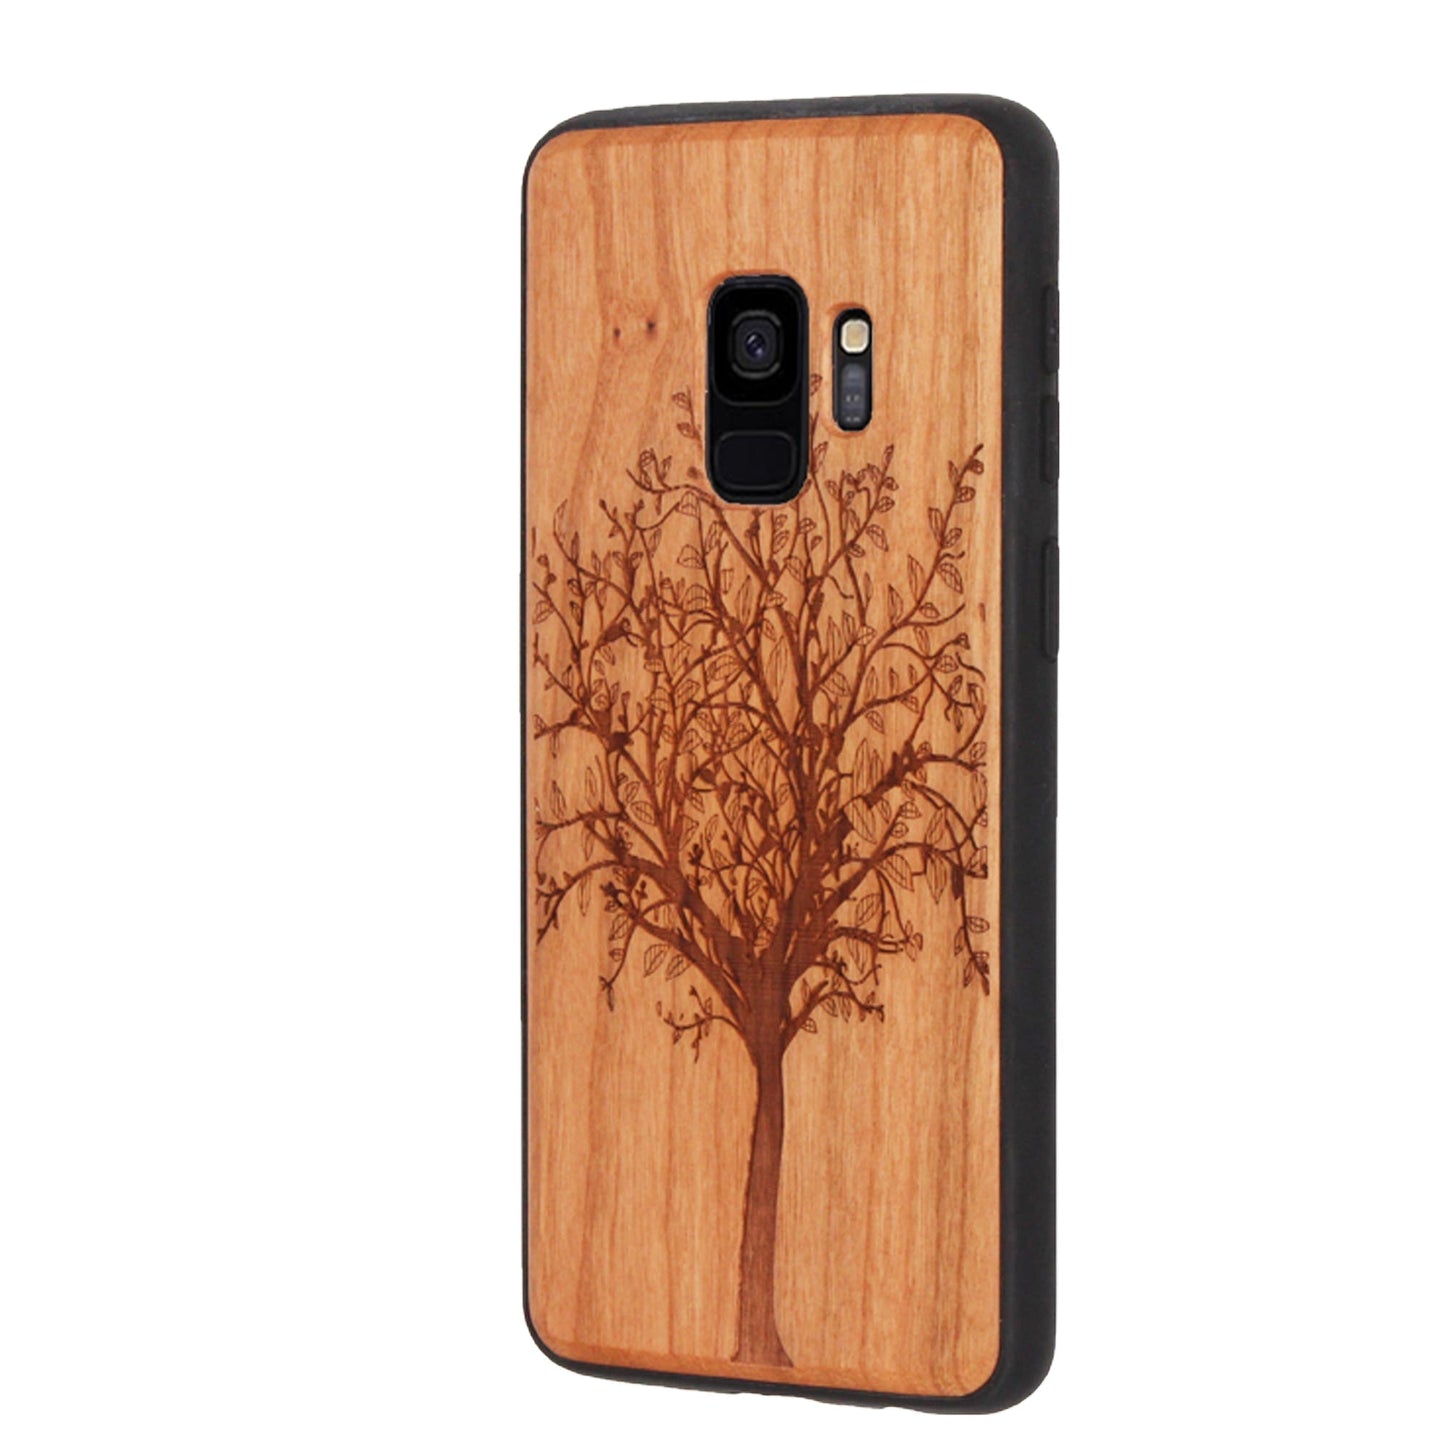 Coque Eden arbre de vie en bois de cerisier pour Samsung Galaxy S9